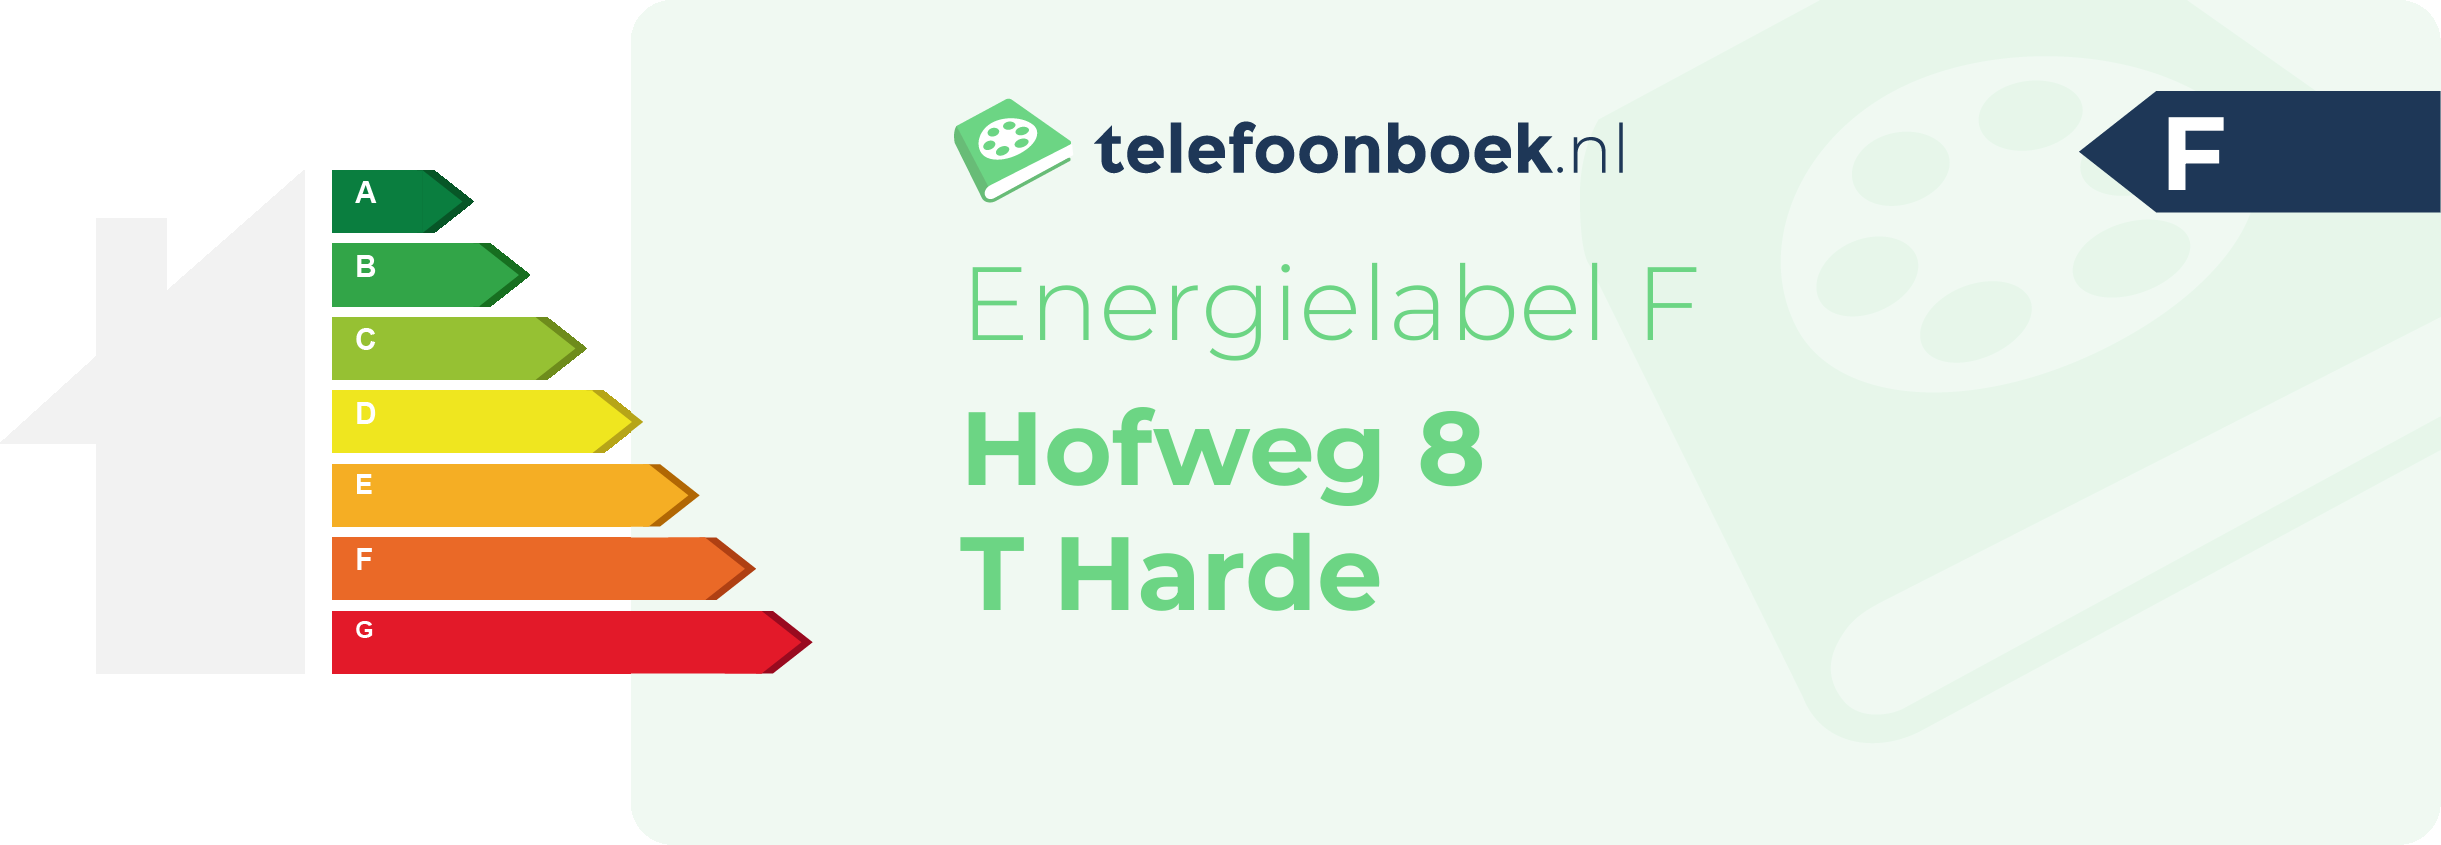 Energielabel Hofweg 8 T Harde